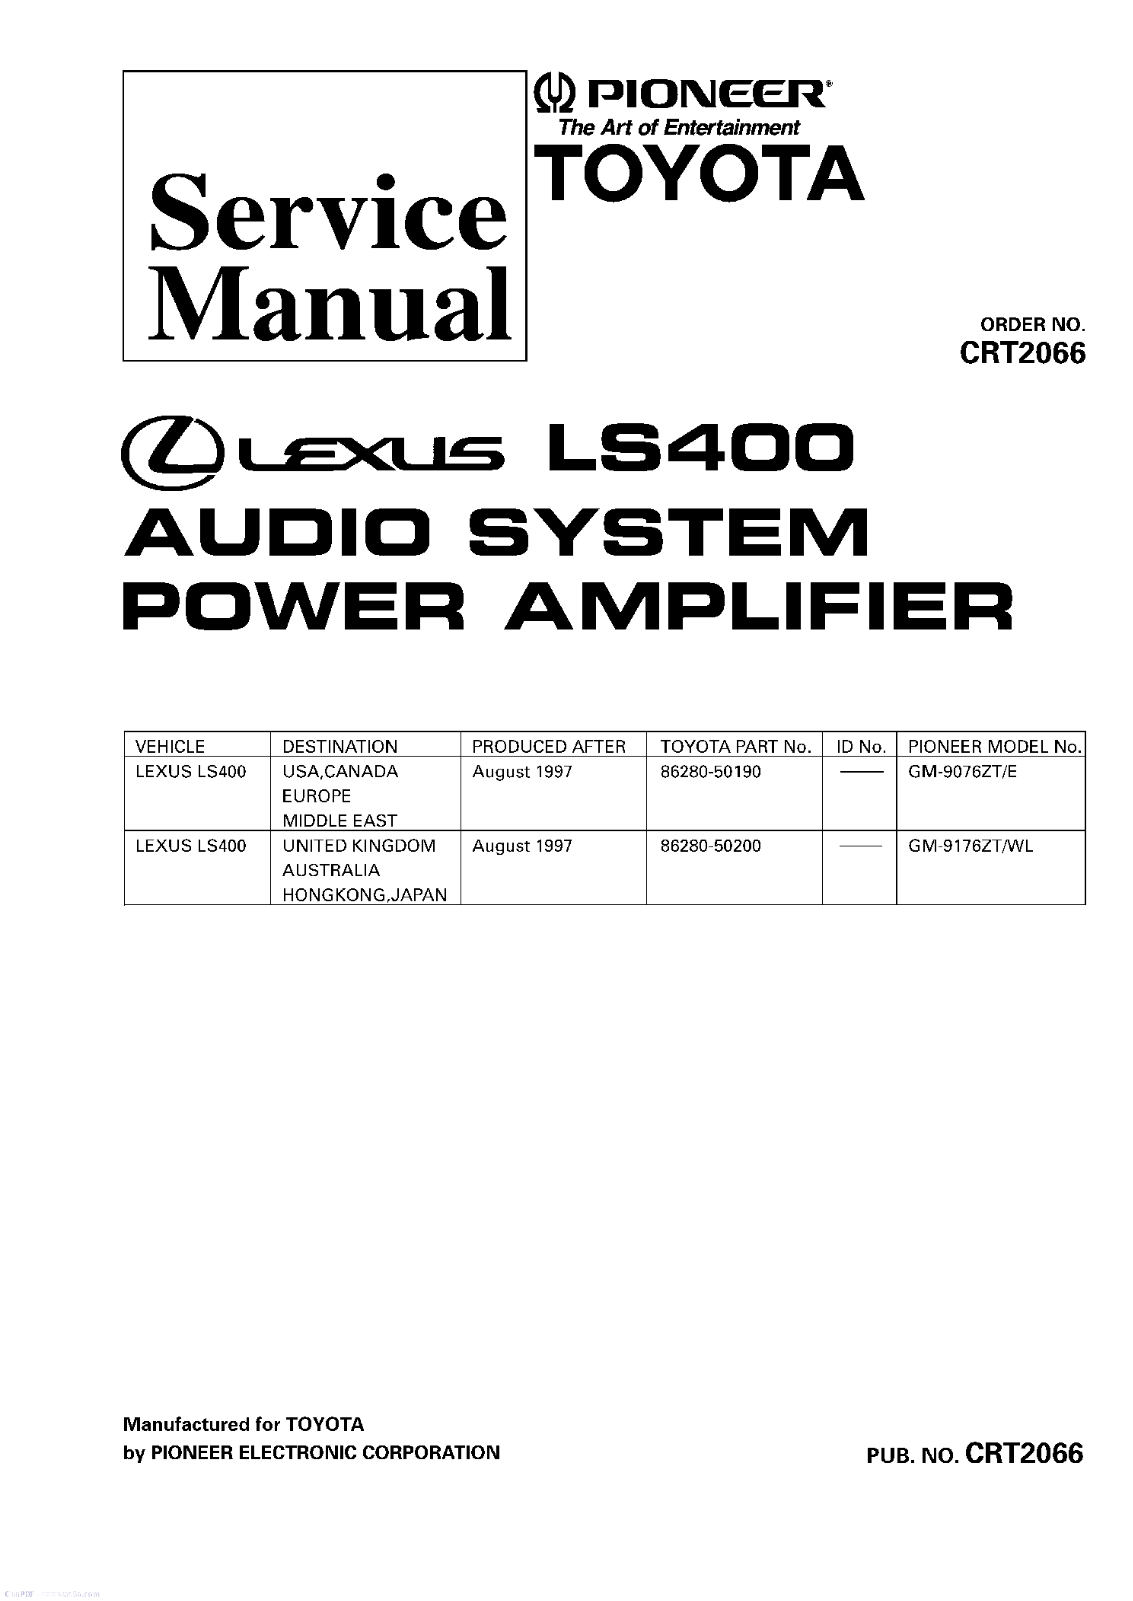 Pioneer GM-9076, GM-9176 Service manual